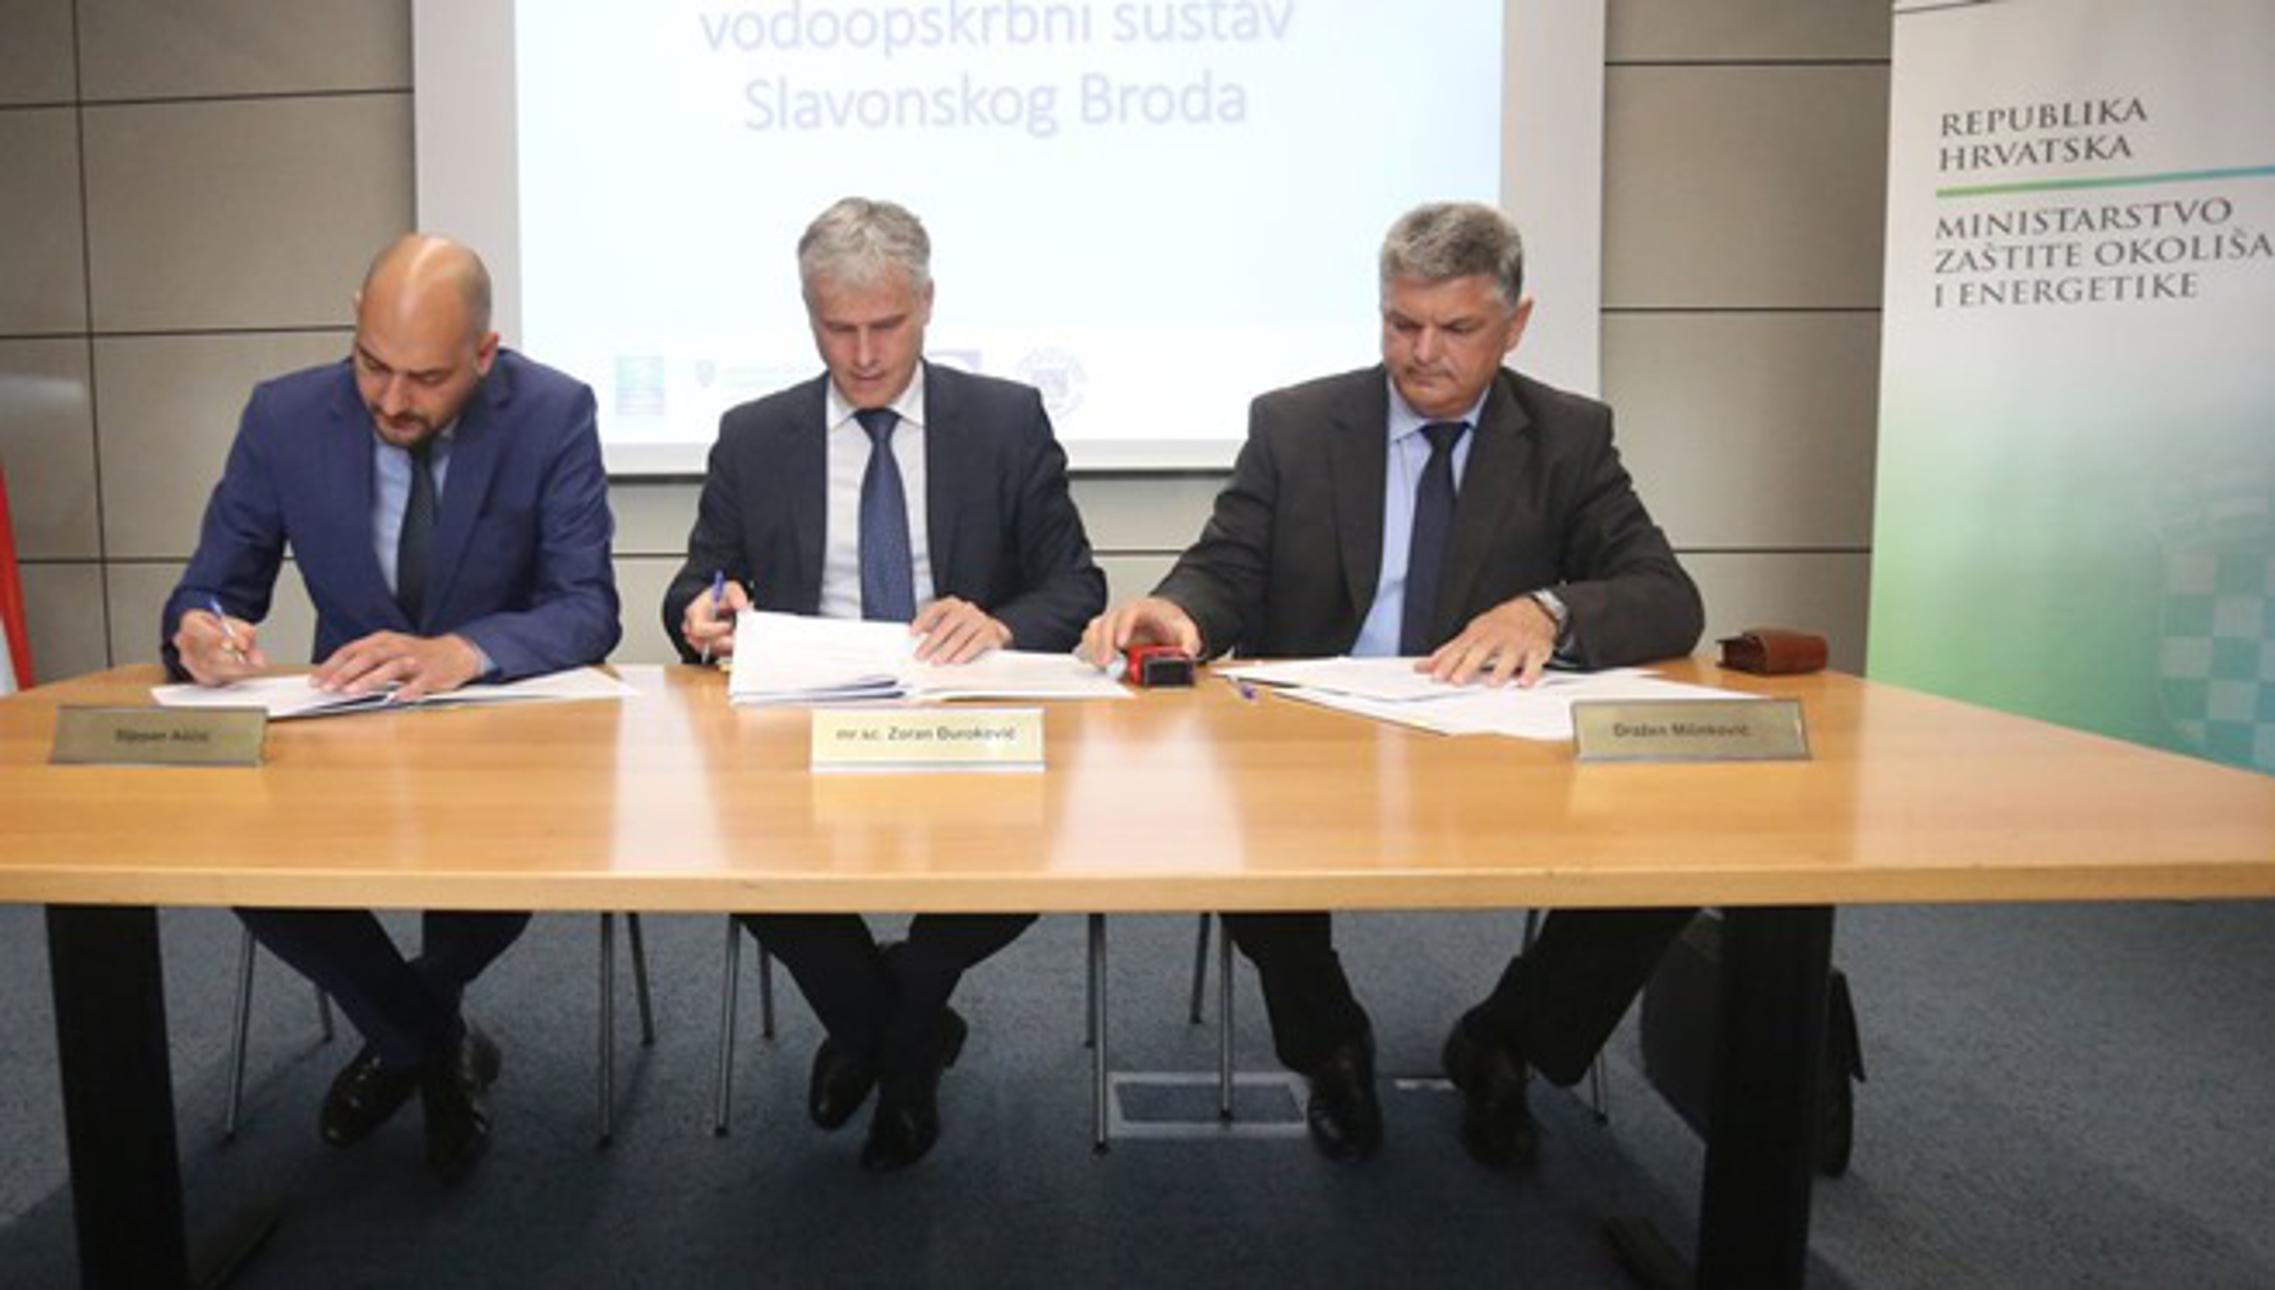 Potpisan sporazum o vodoopskrbnom sustavu Slavonski Brod